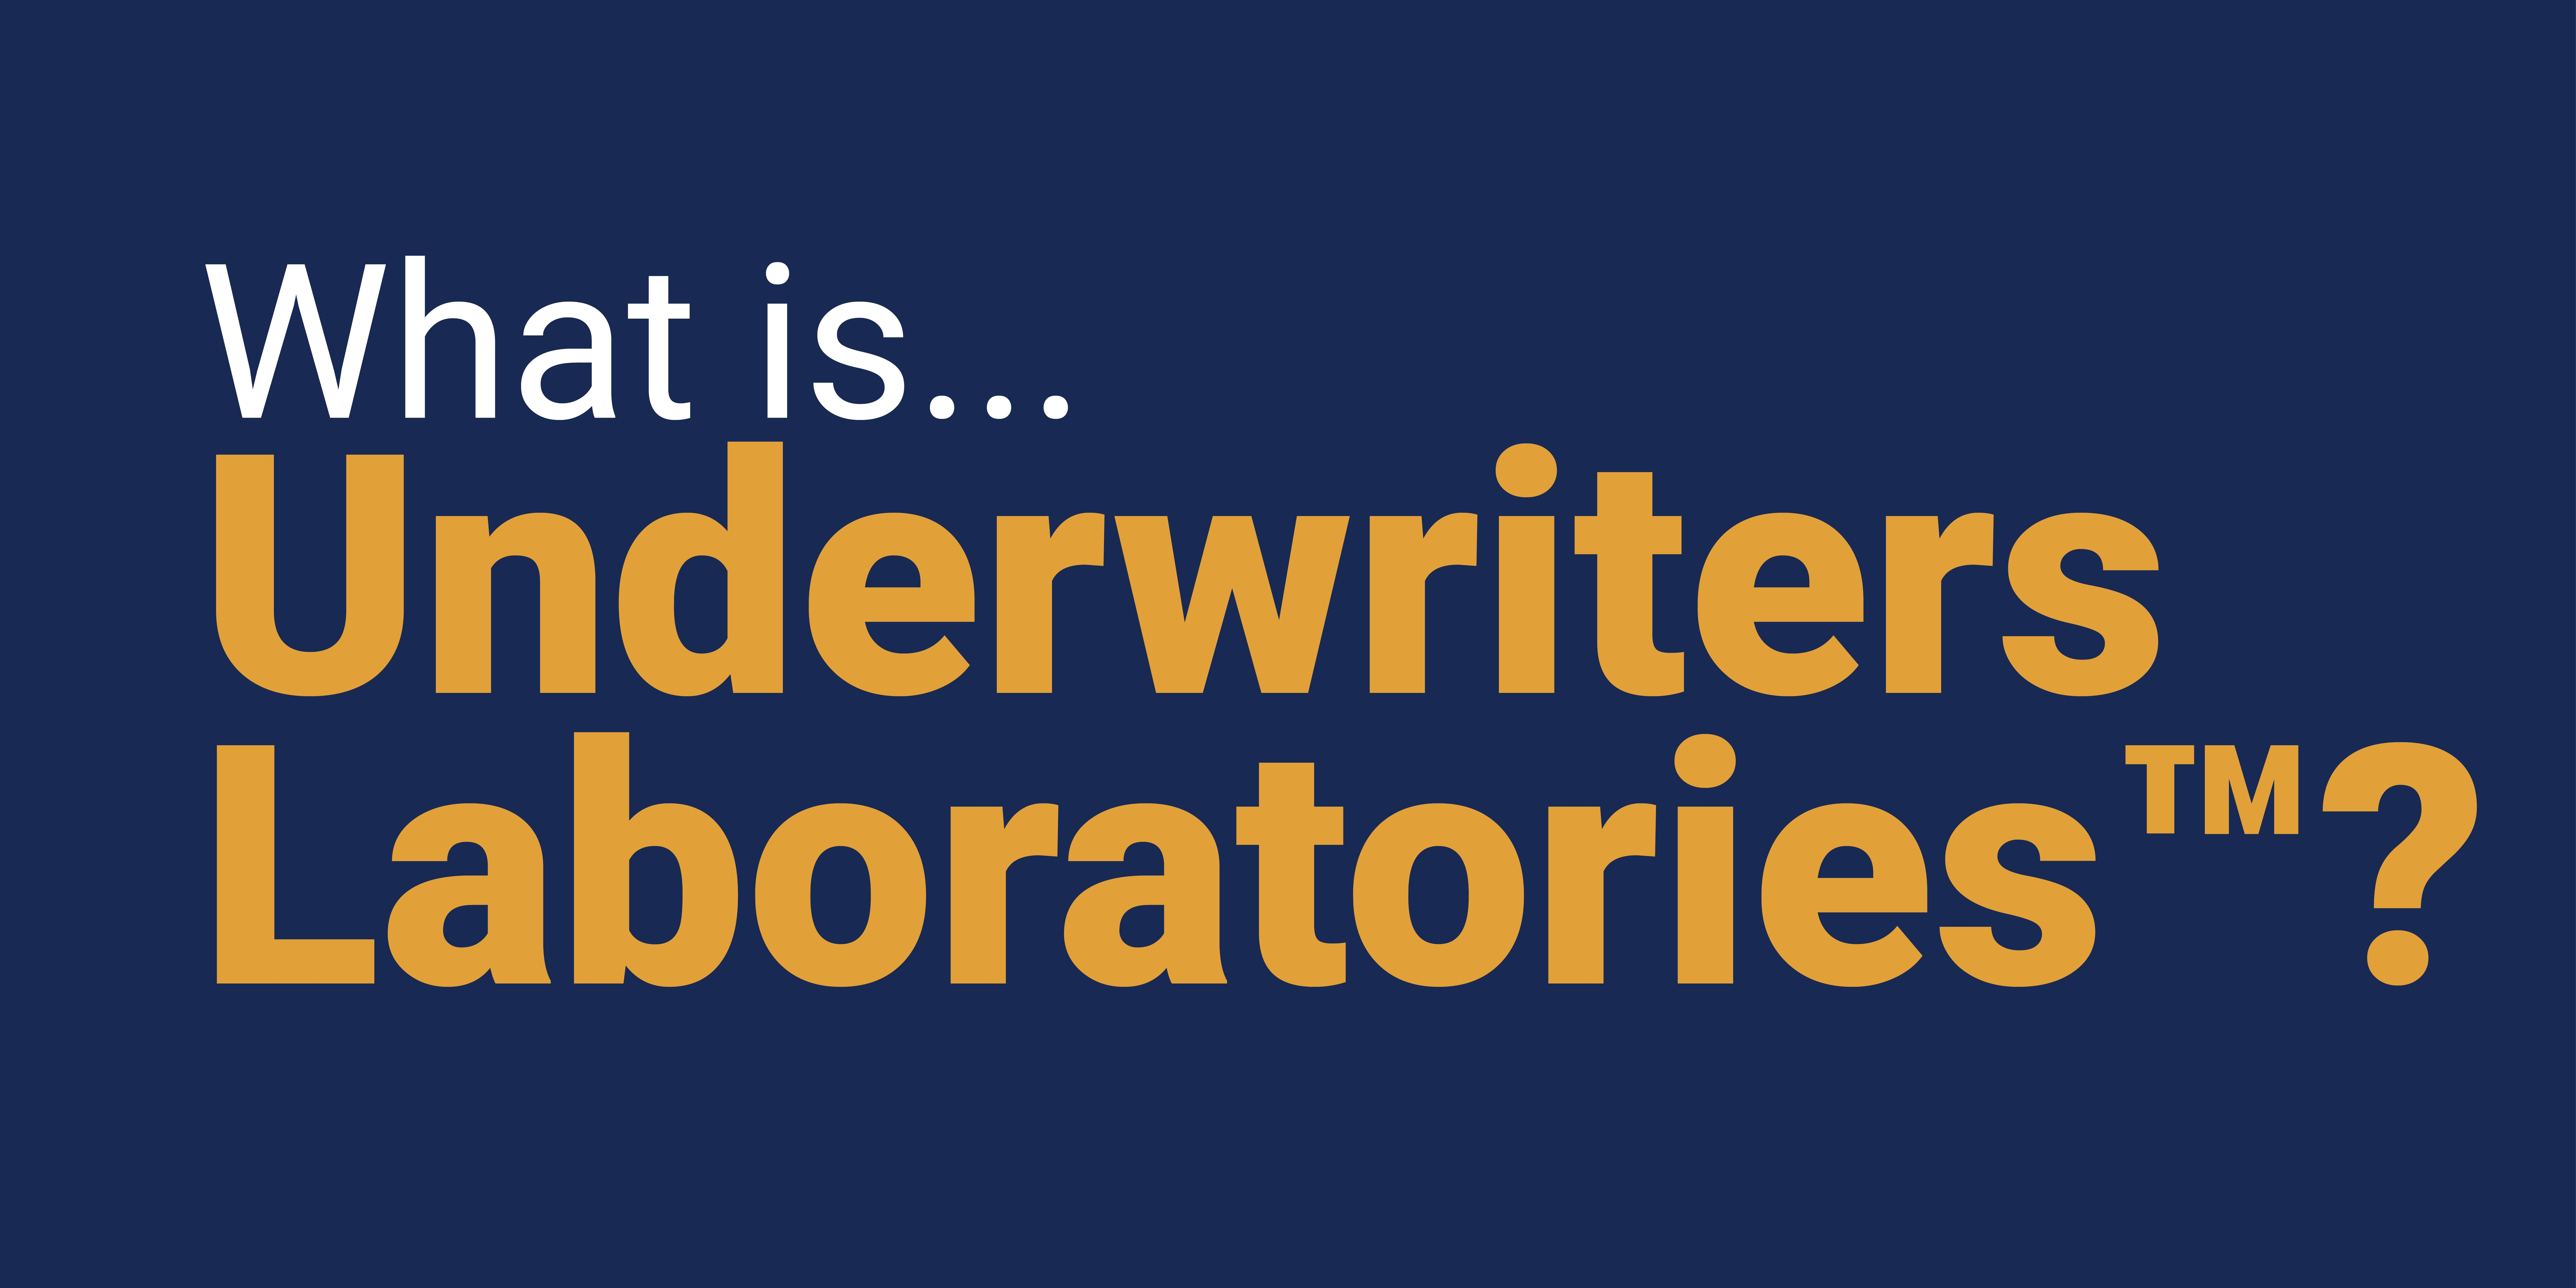 What is Underwriters Laboratories?